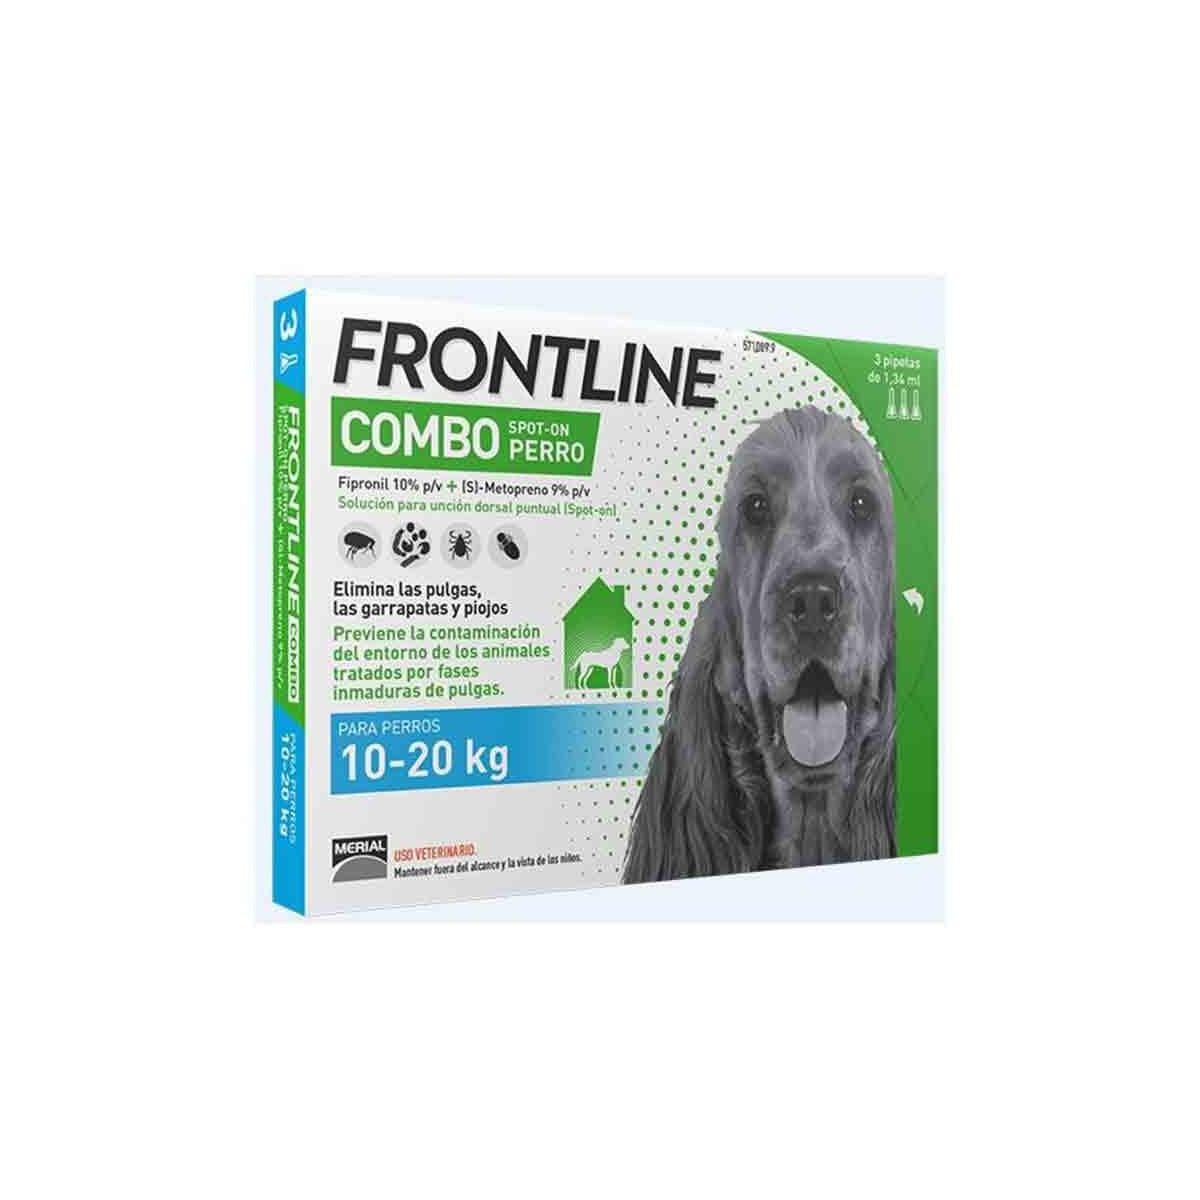 Frontline Combo Perro 10-20 kilos